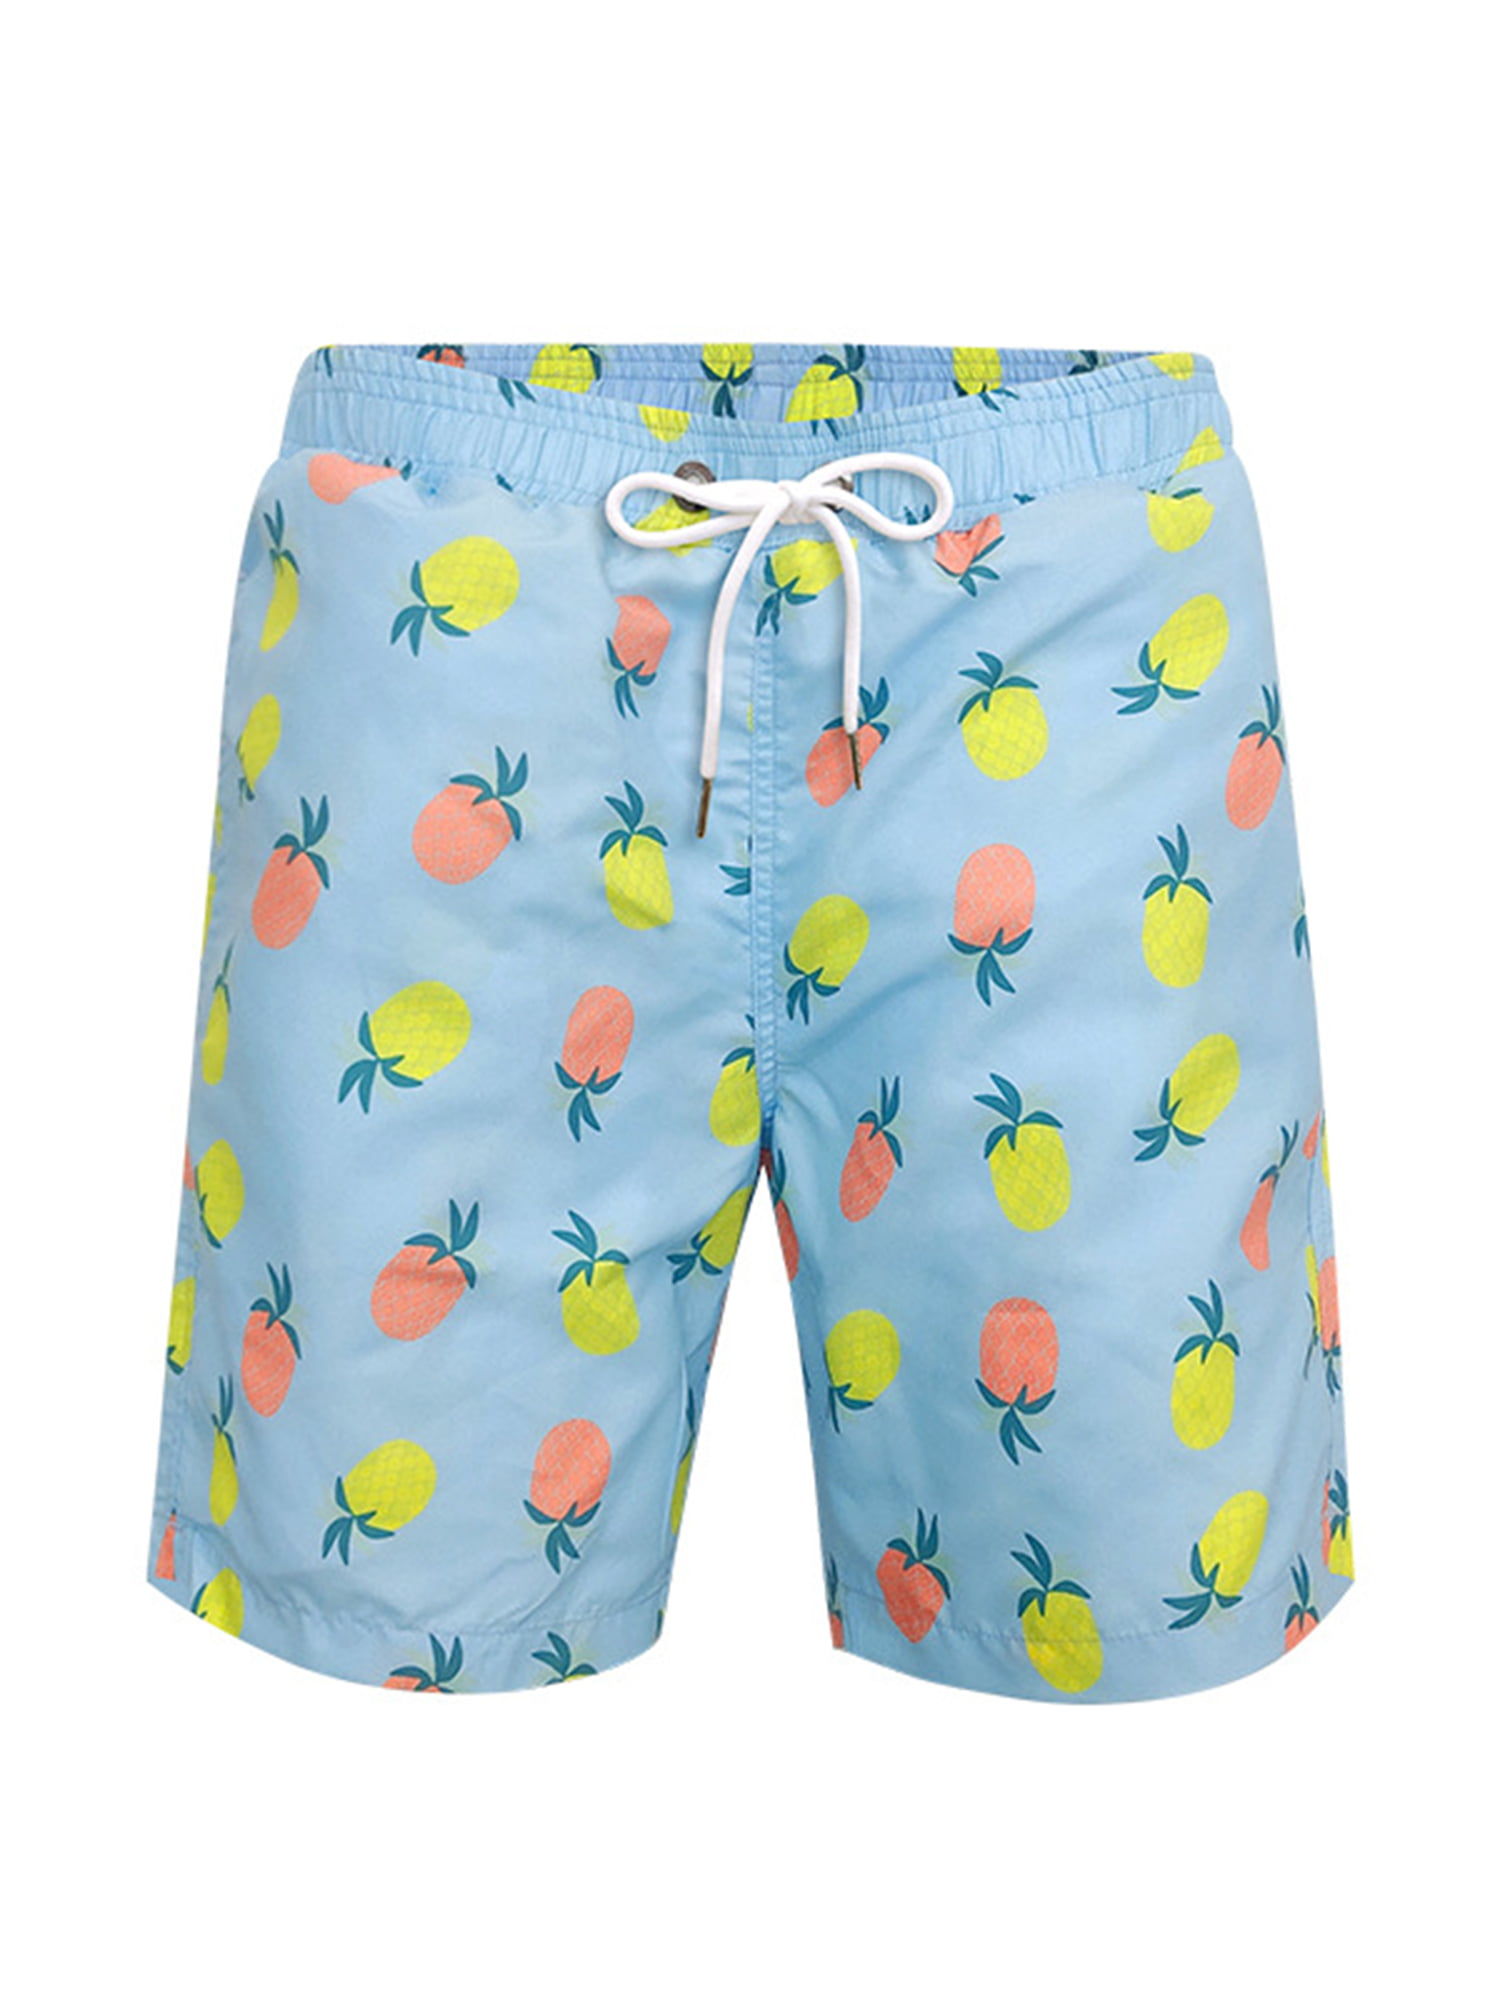 Tailor Pal Love Mens Printed Swim Trunks Quick Dry Bathing Suit Drawstring Waistband Cool Summer Beachwear Shorts M Grey